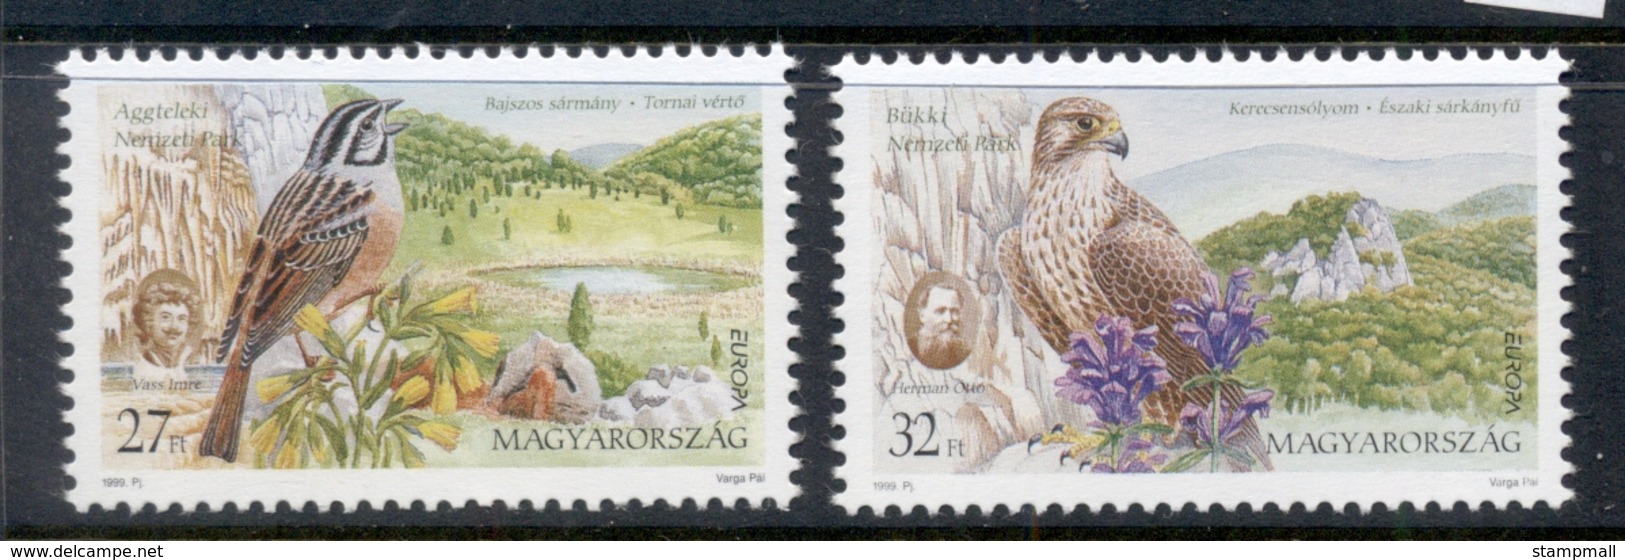 Hungary 1999 National Park, Birds MUH - Unused Stamps